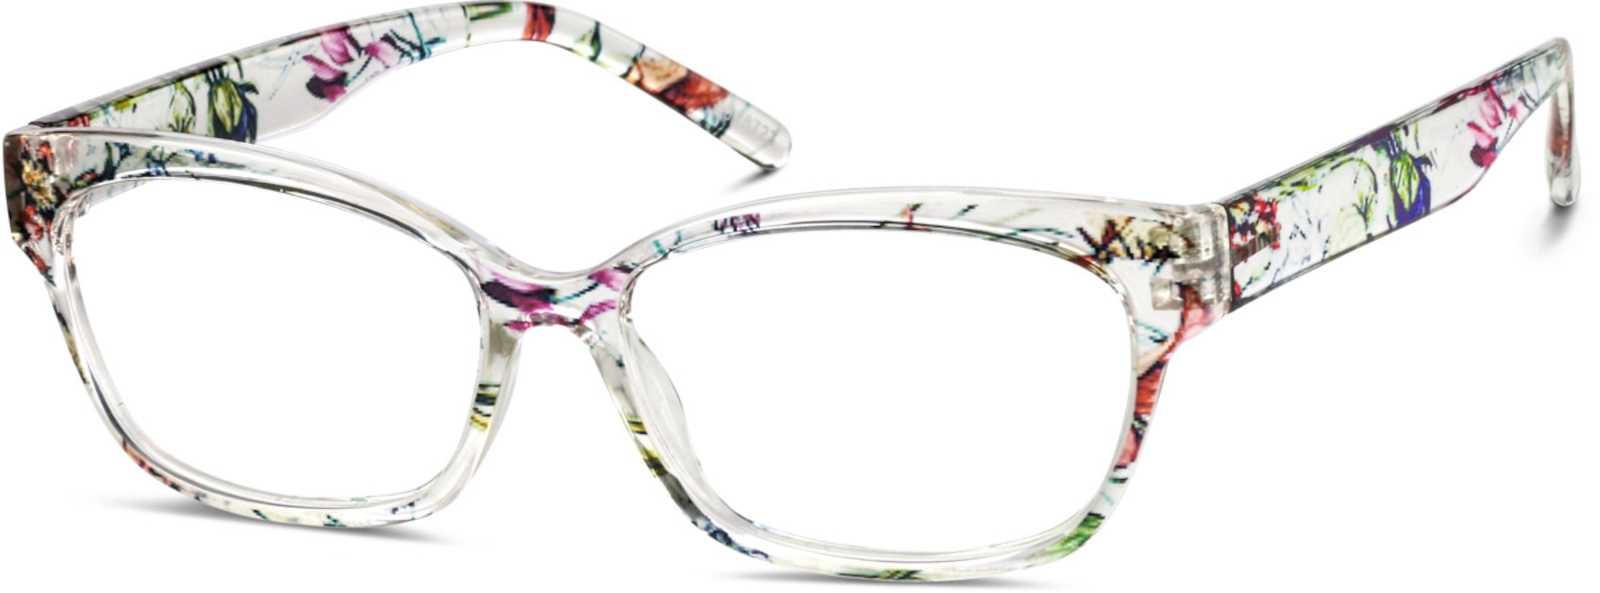 Zenni Women's Cat-Eye Prescription Glasses Floral Floral Plastic Full Rim Frame